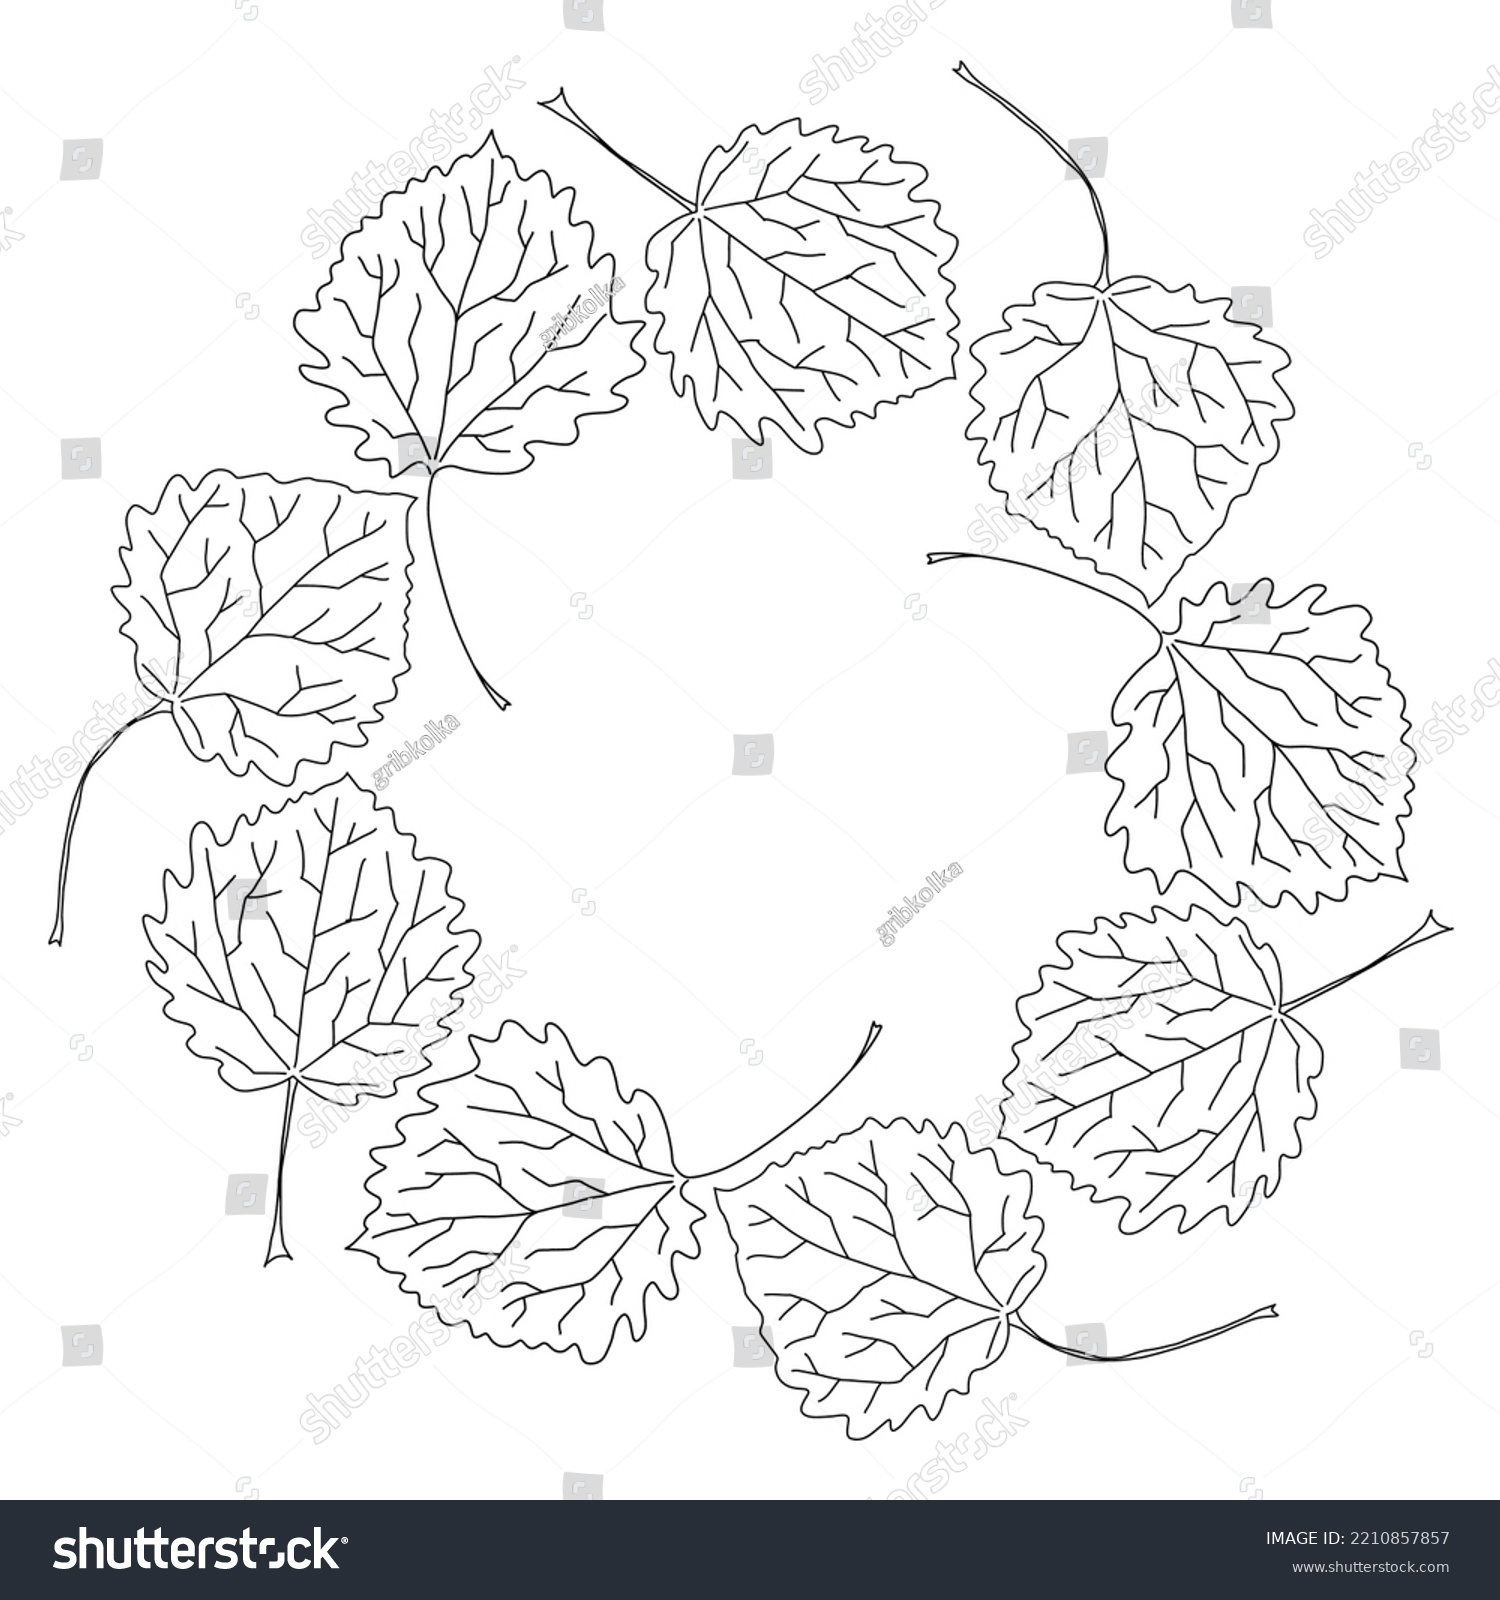 SVG of Set of autumn aspen leaves hand drawn line art doodle vector wreath illustration for creative design artistic work card banner poster fabrics textile decor graphic design svg